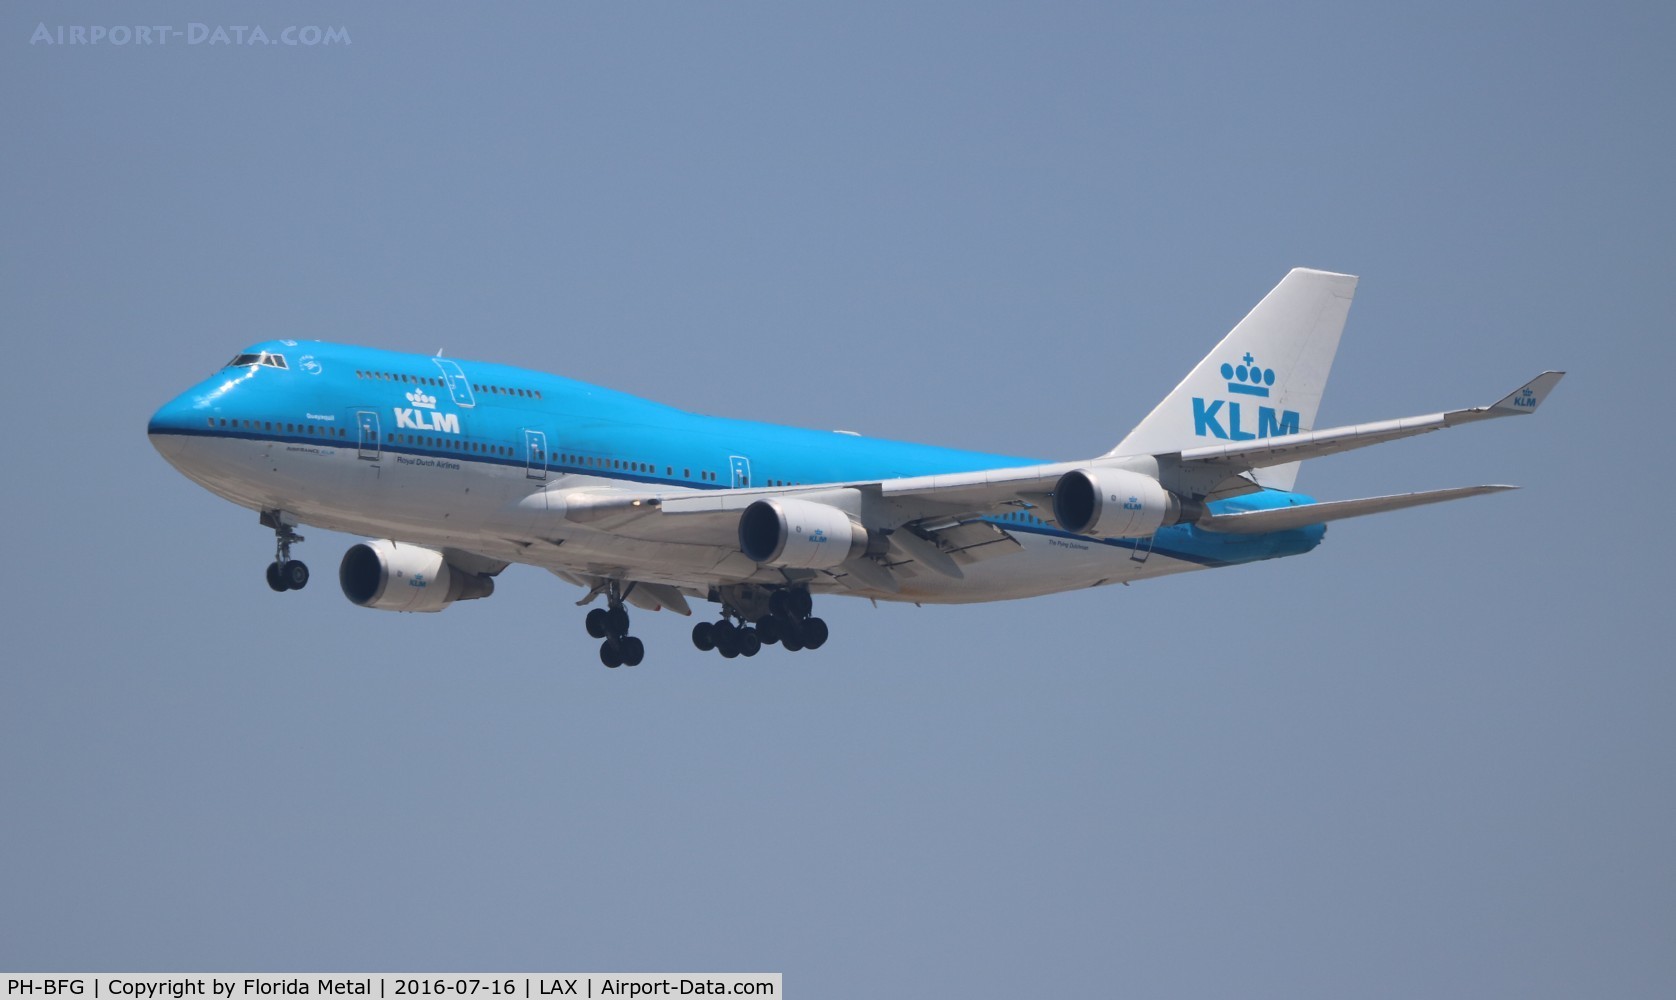 PH-BFG, 1990 Boeing 747-406 C/N 24517, KLM 747-400